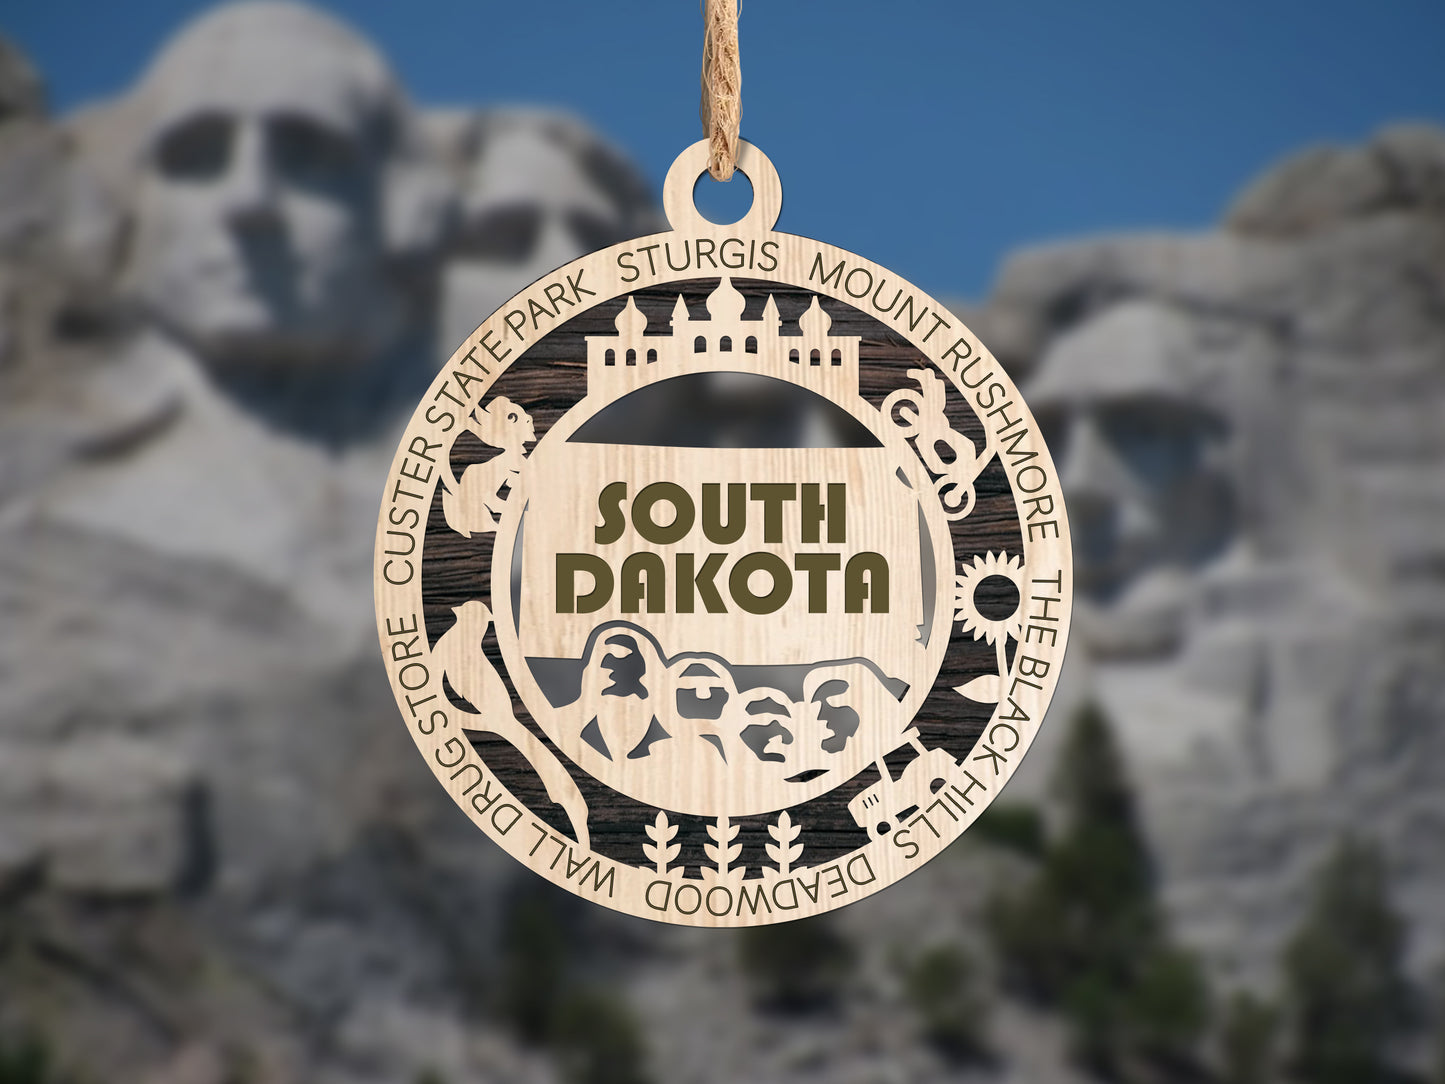 South Dakota ornament